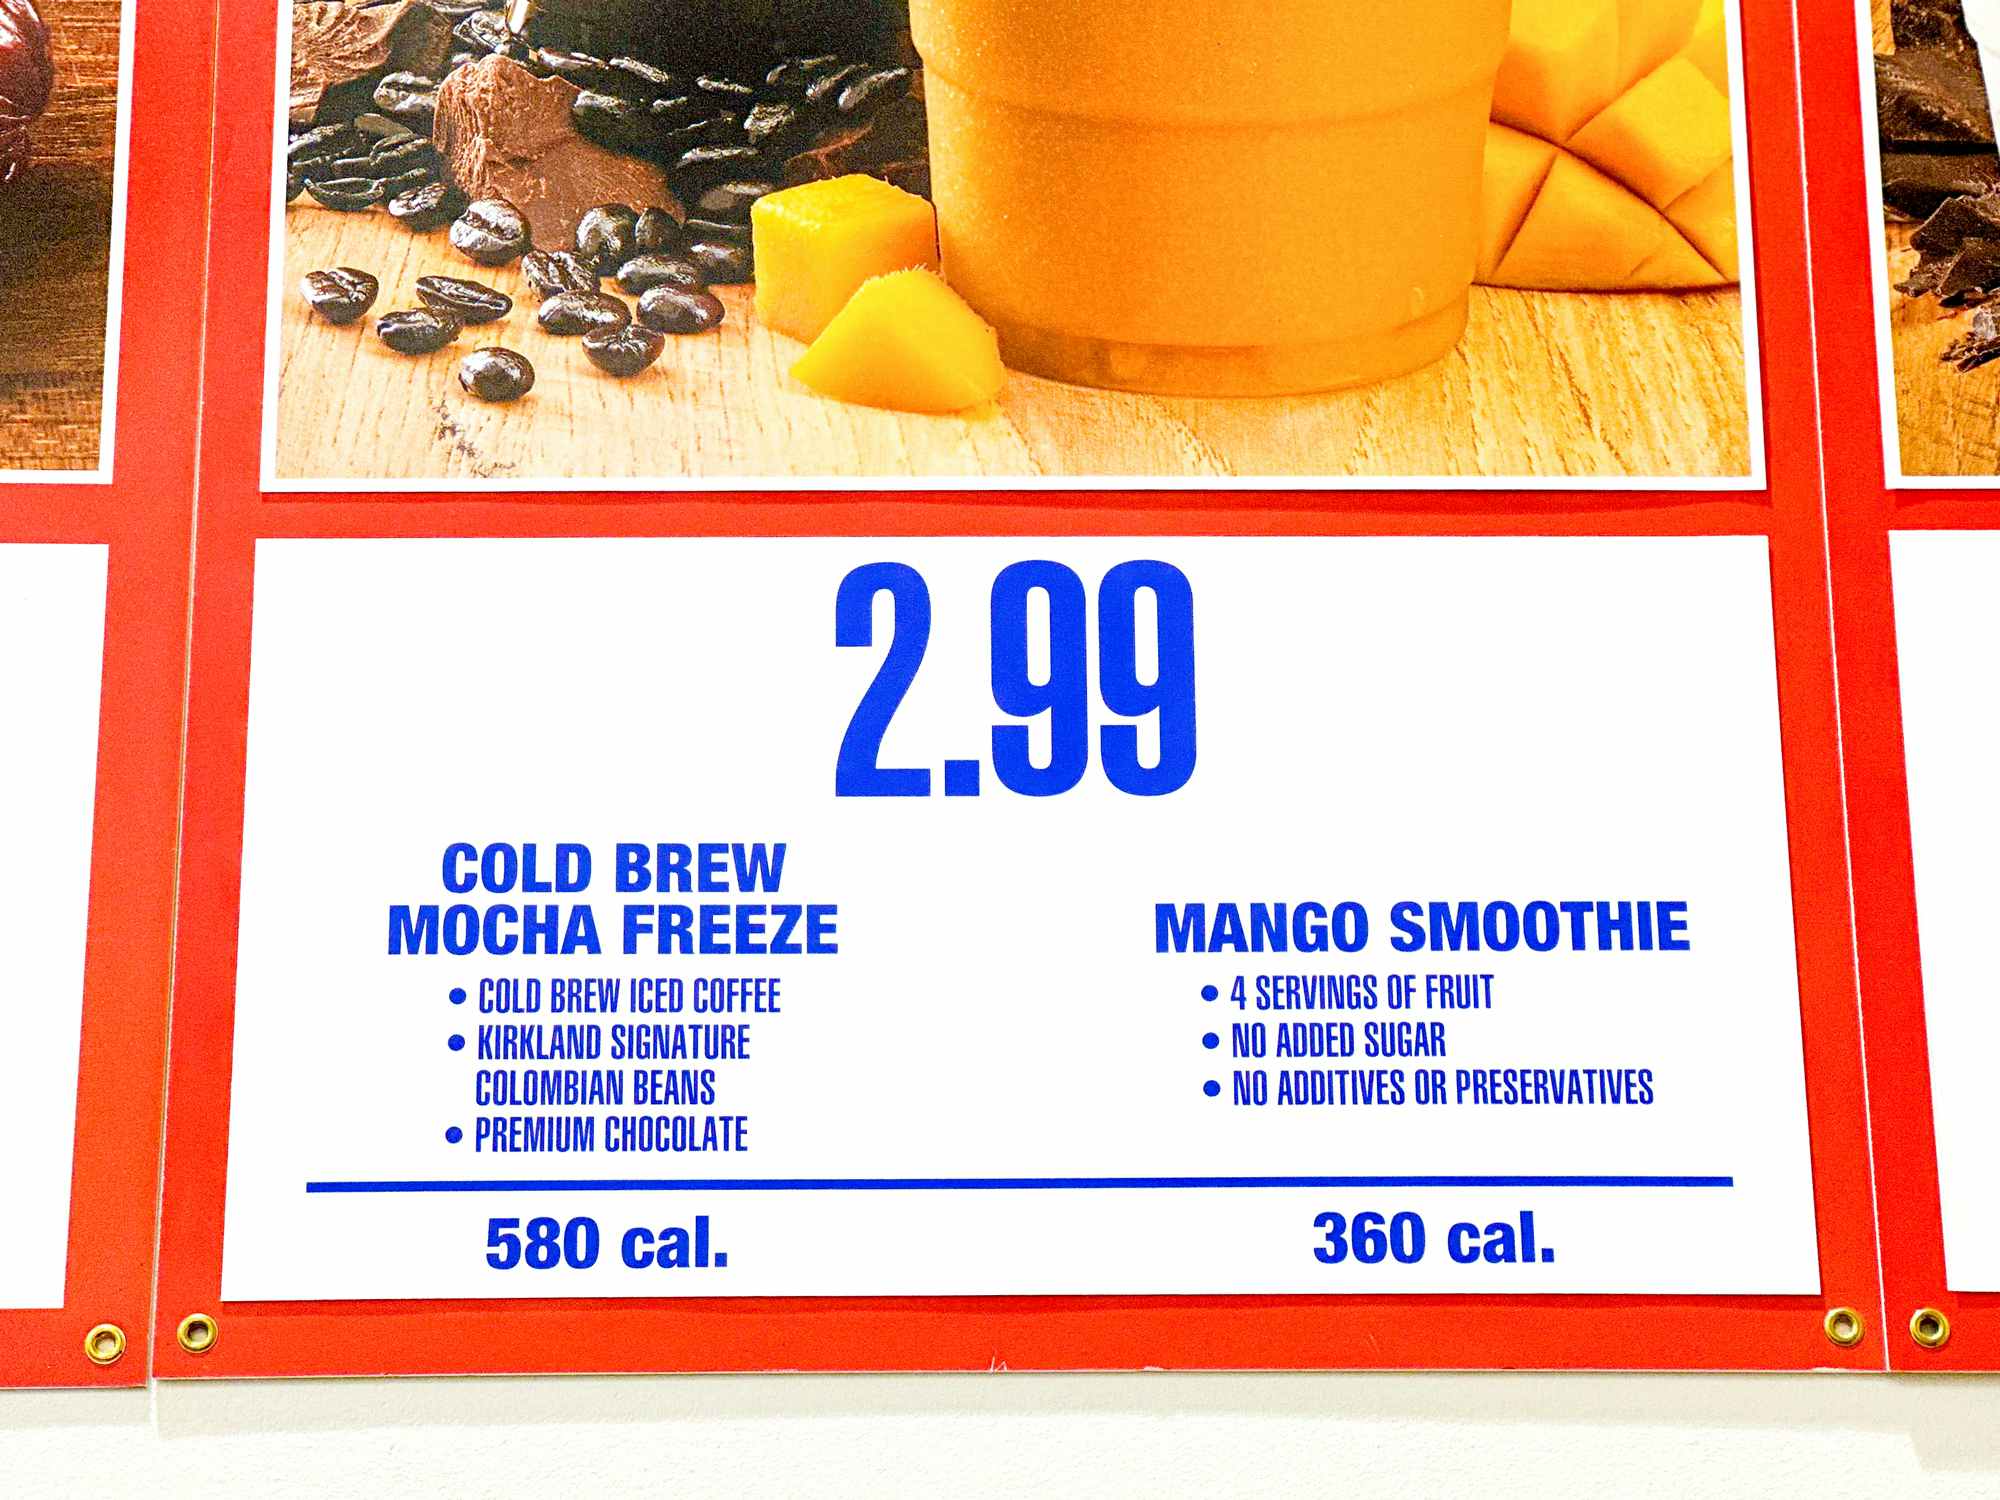 close-up of the mango smoothie price on a costco menu